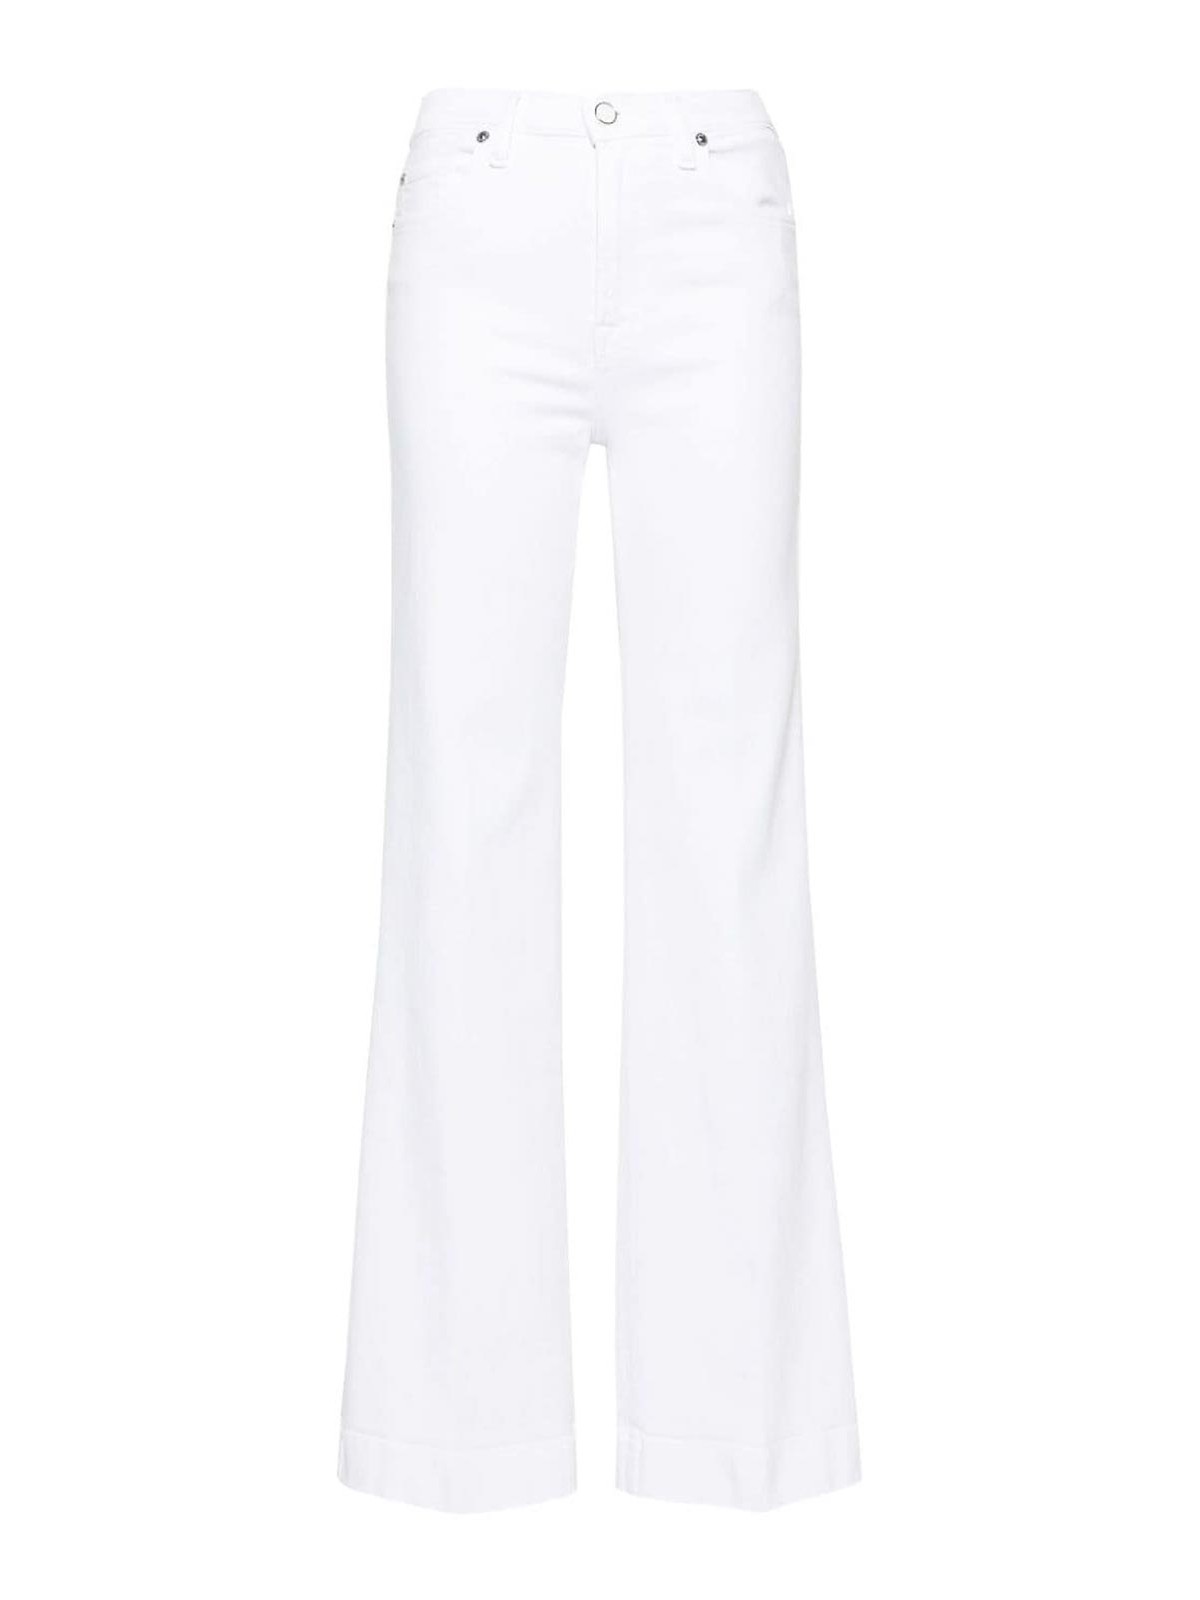 Seven White Jeans